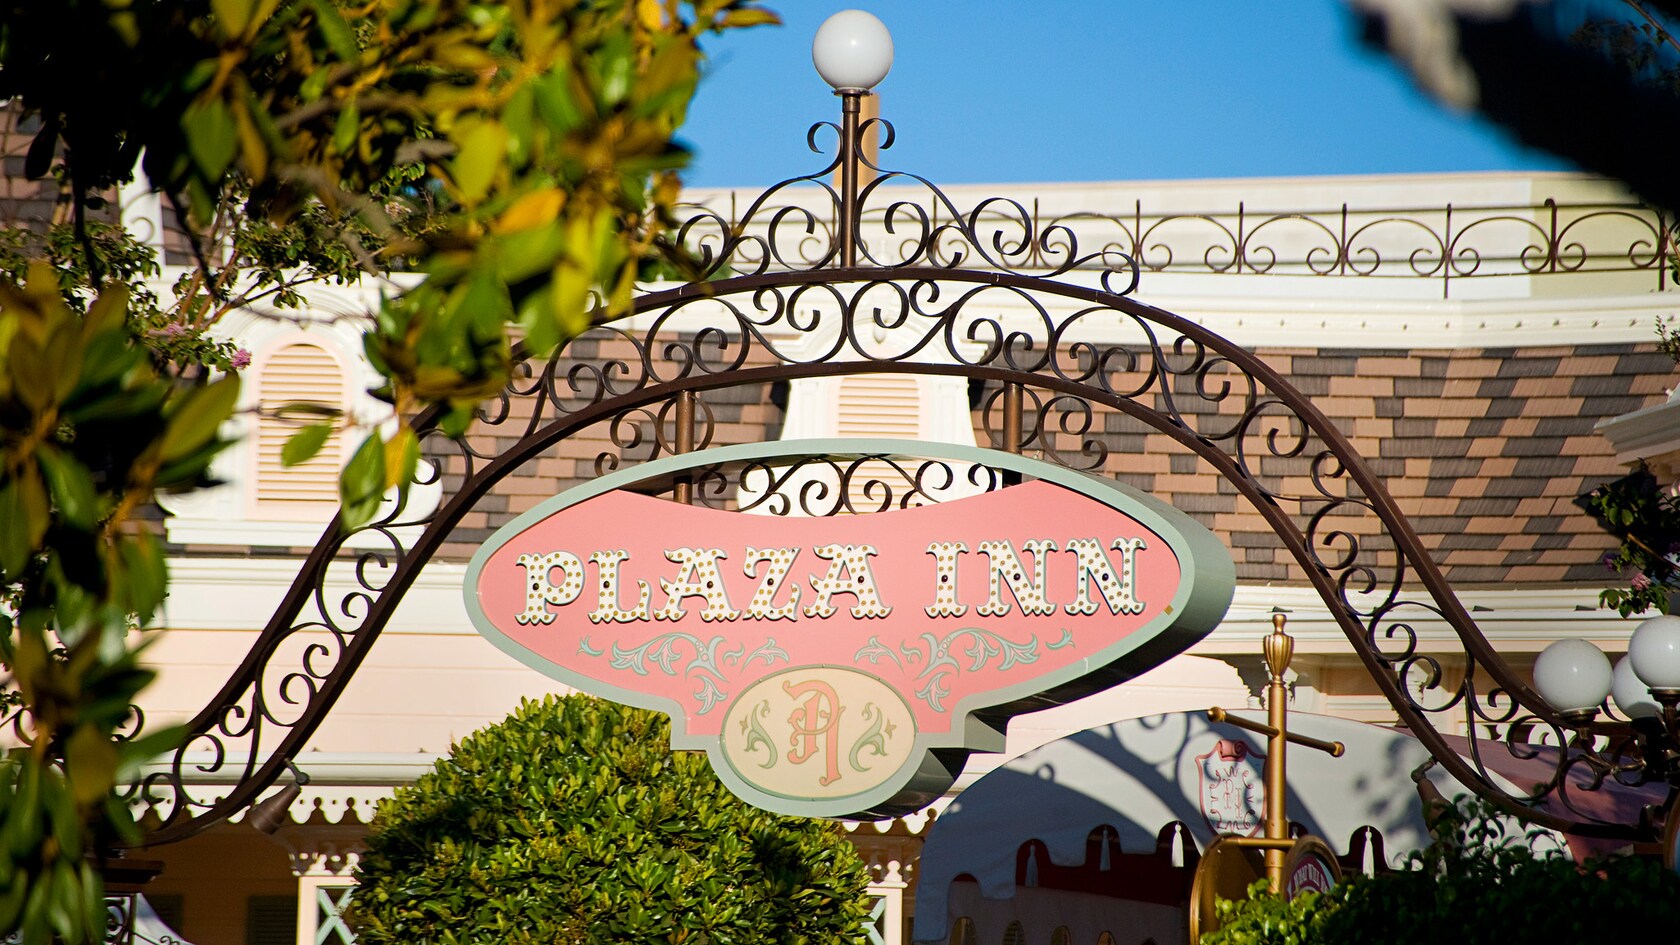 Plaza Inn entrance sign, Disneyland Park.